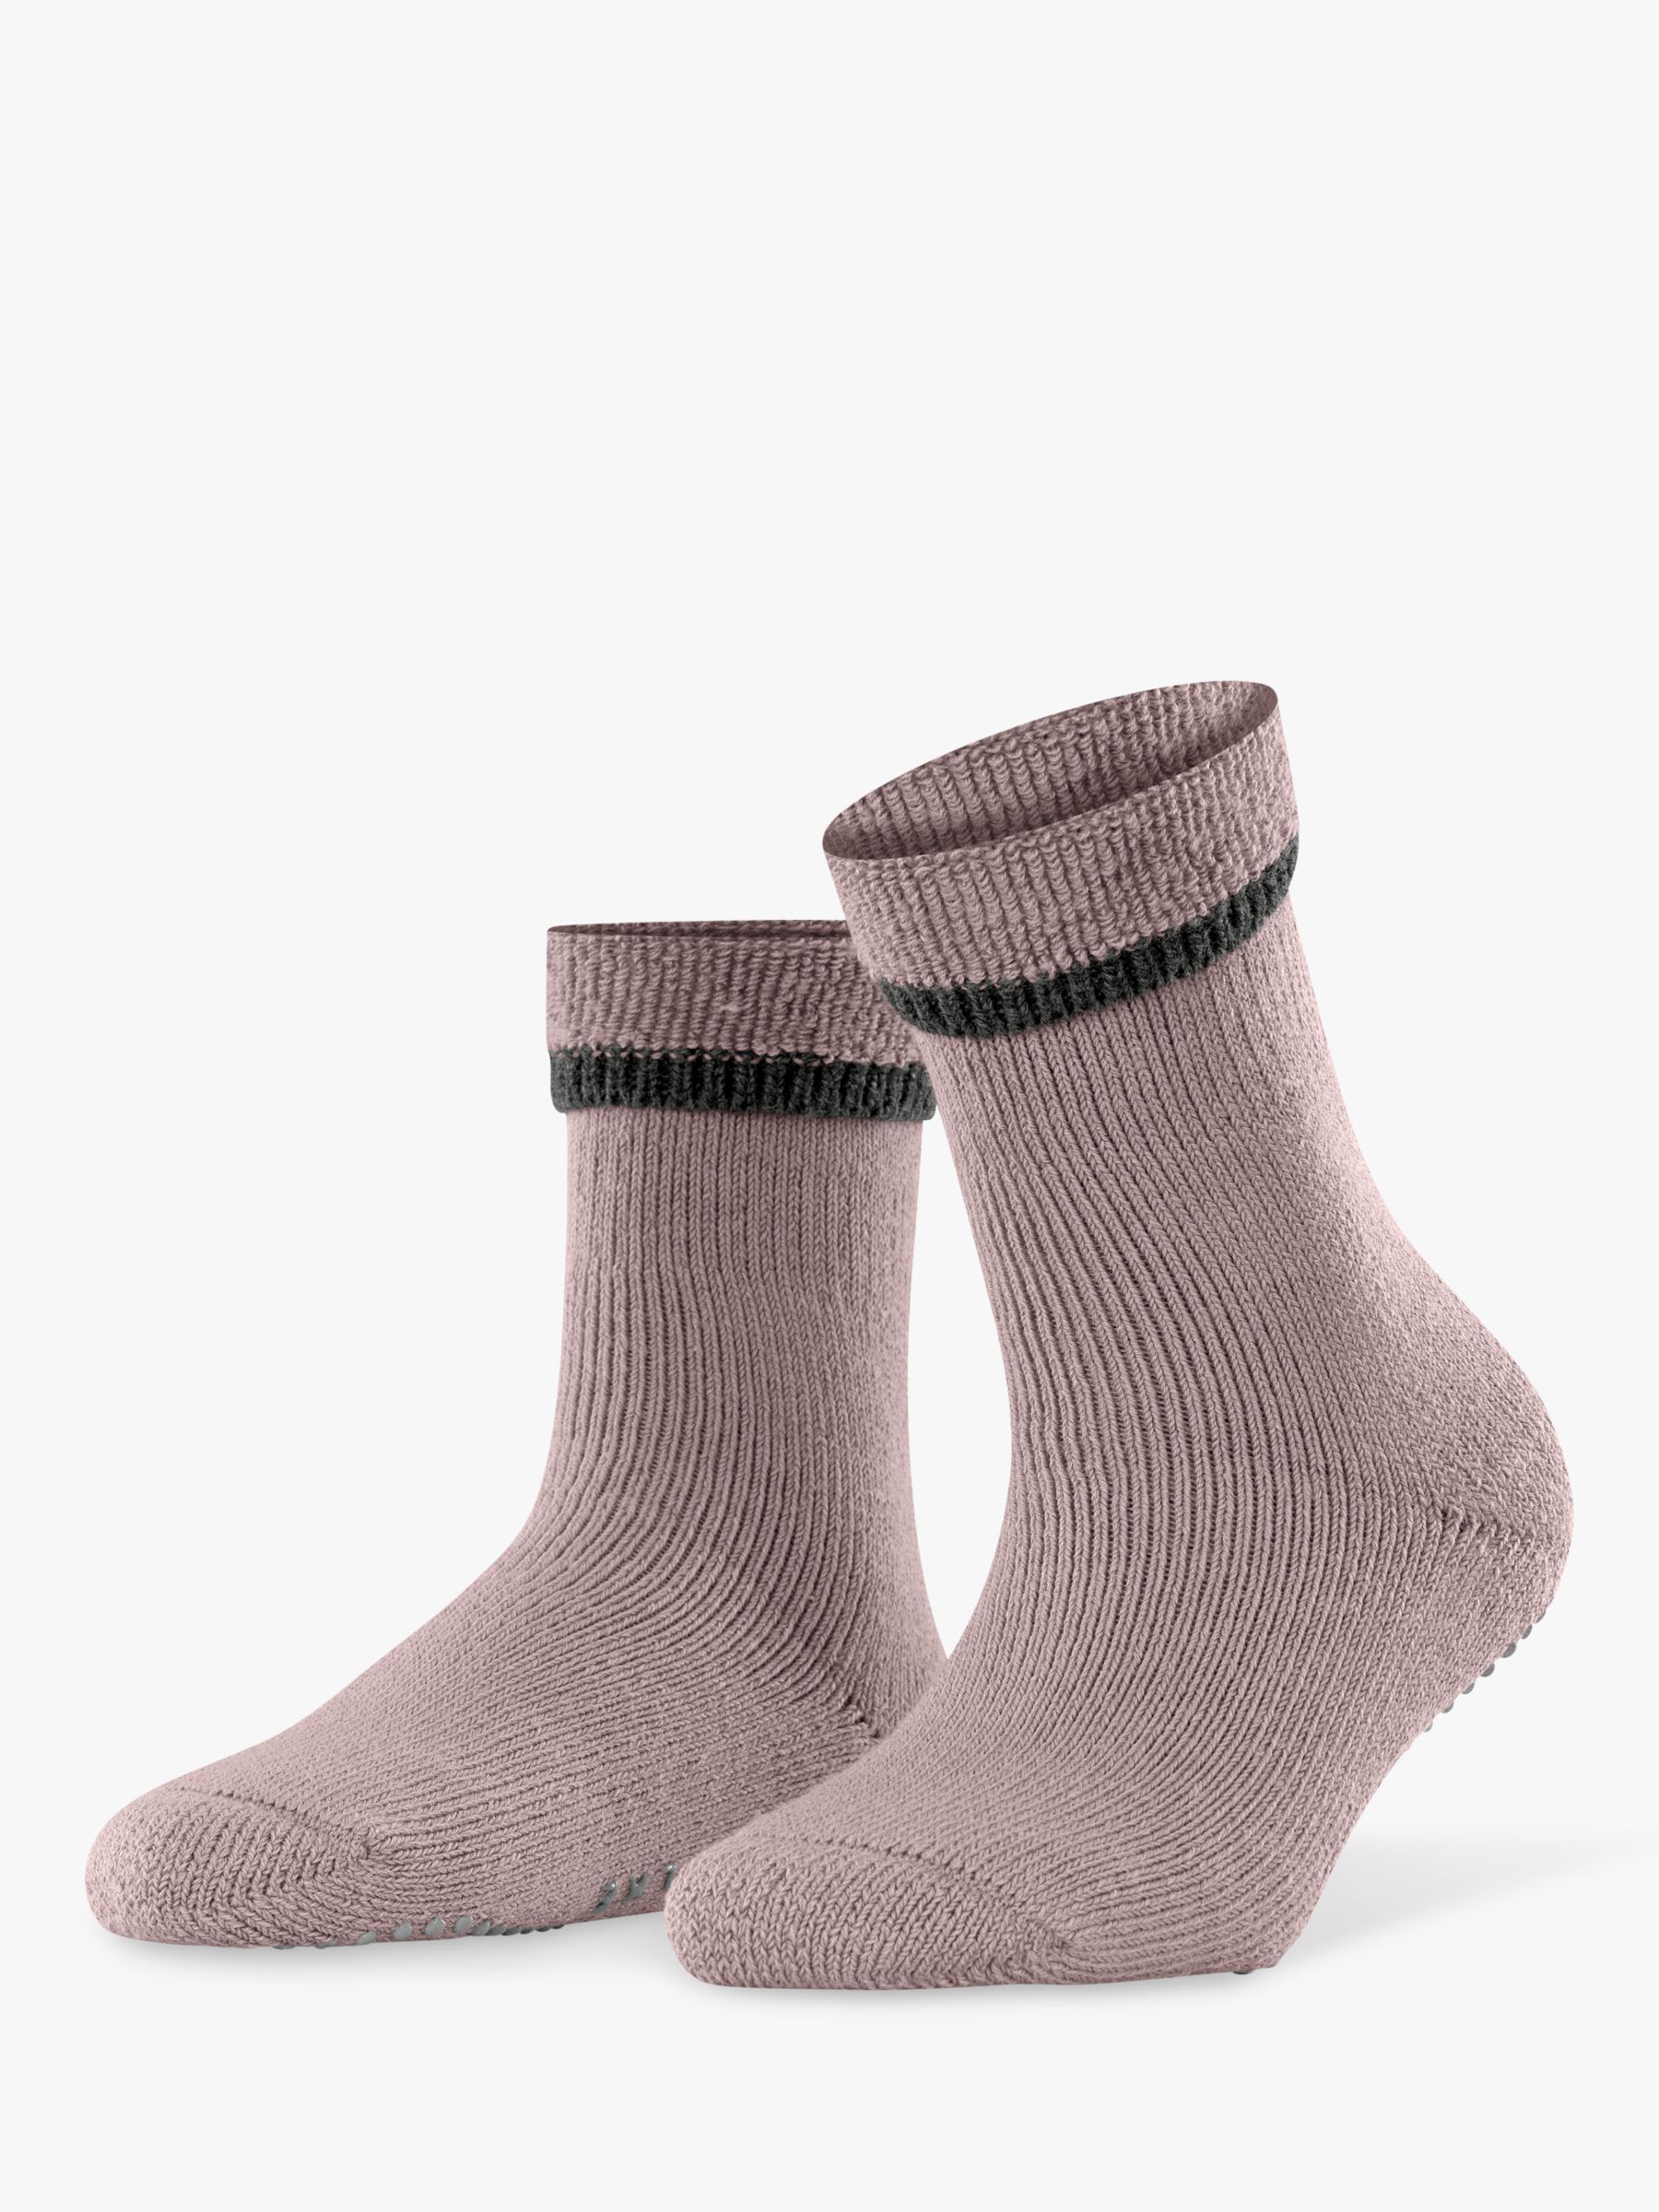 SNUG STAR Fashion Liner Socks 6 Pairs Lace Non Slip Socks for Women